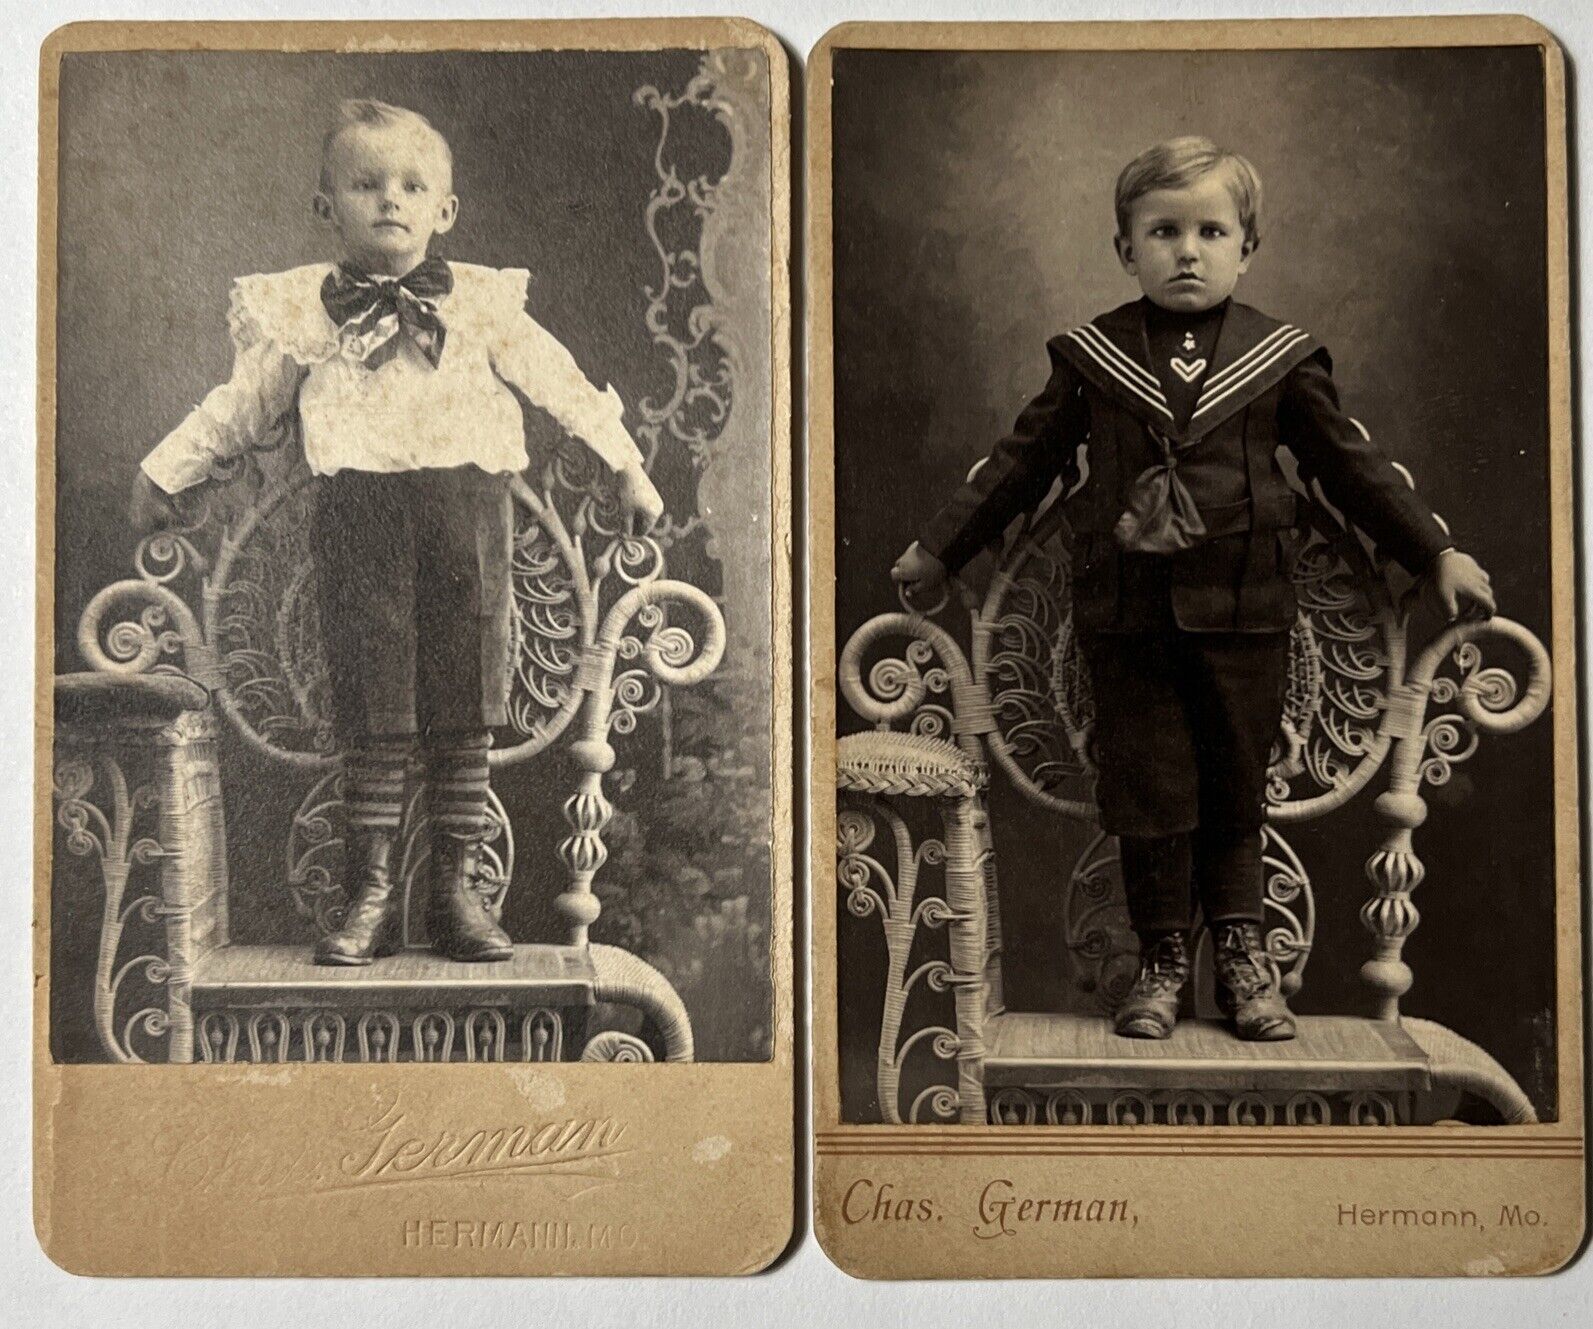 HERMANN MISSOURI 1880s Victorian Boys Lot of 2 CDV Carte de Visite Photos 1880s